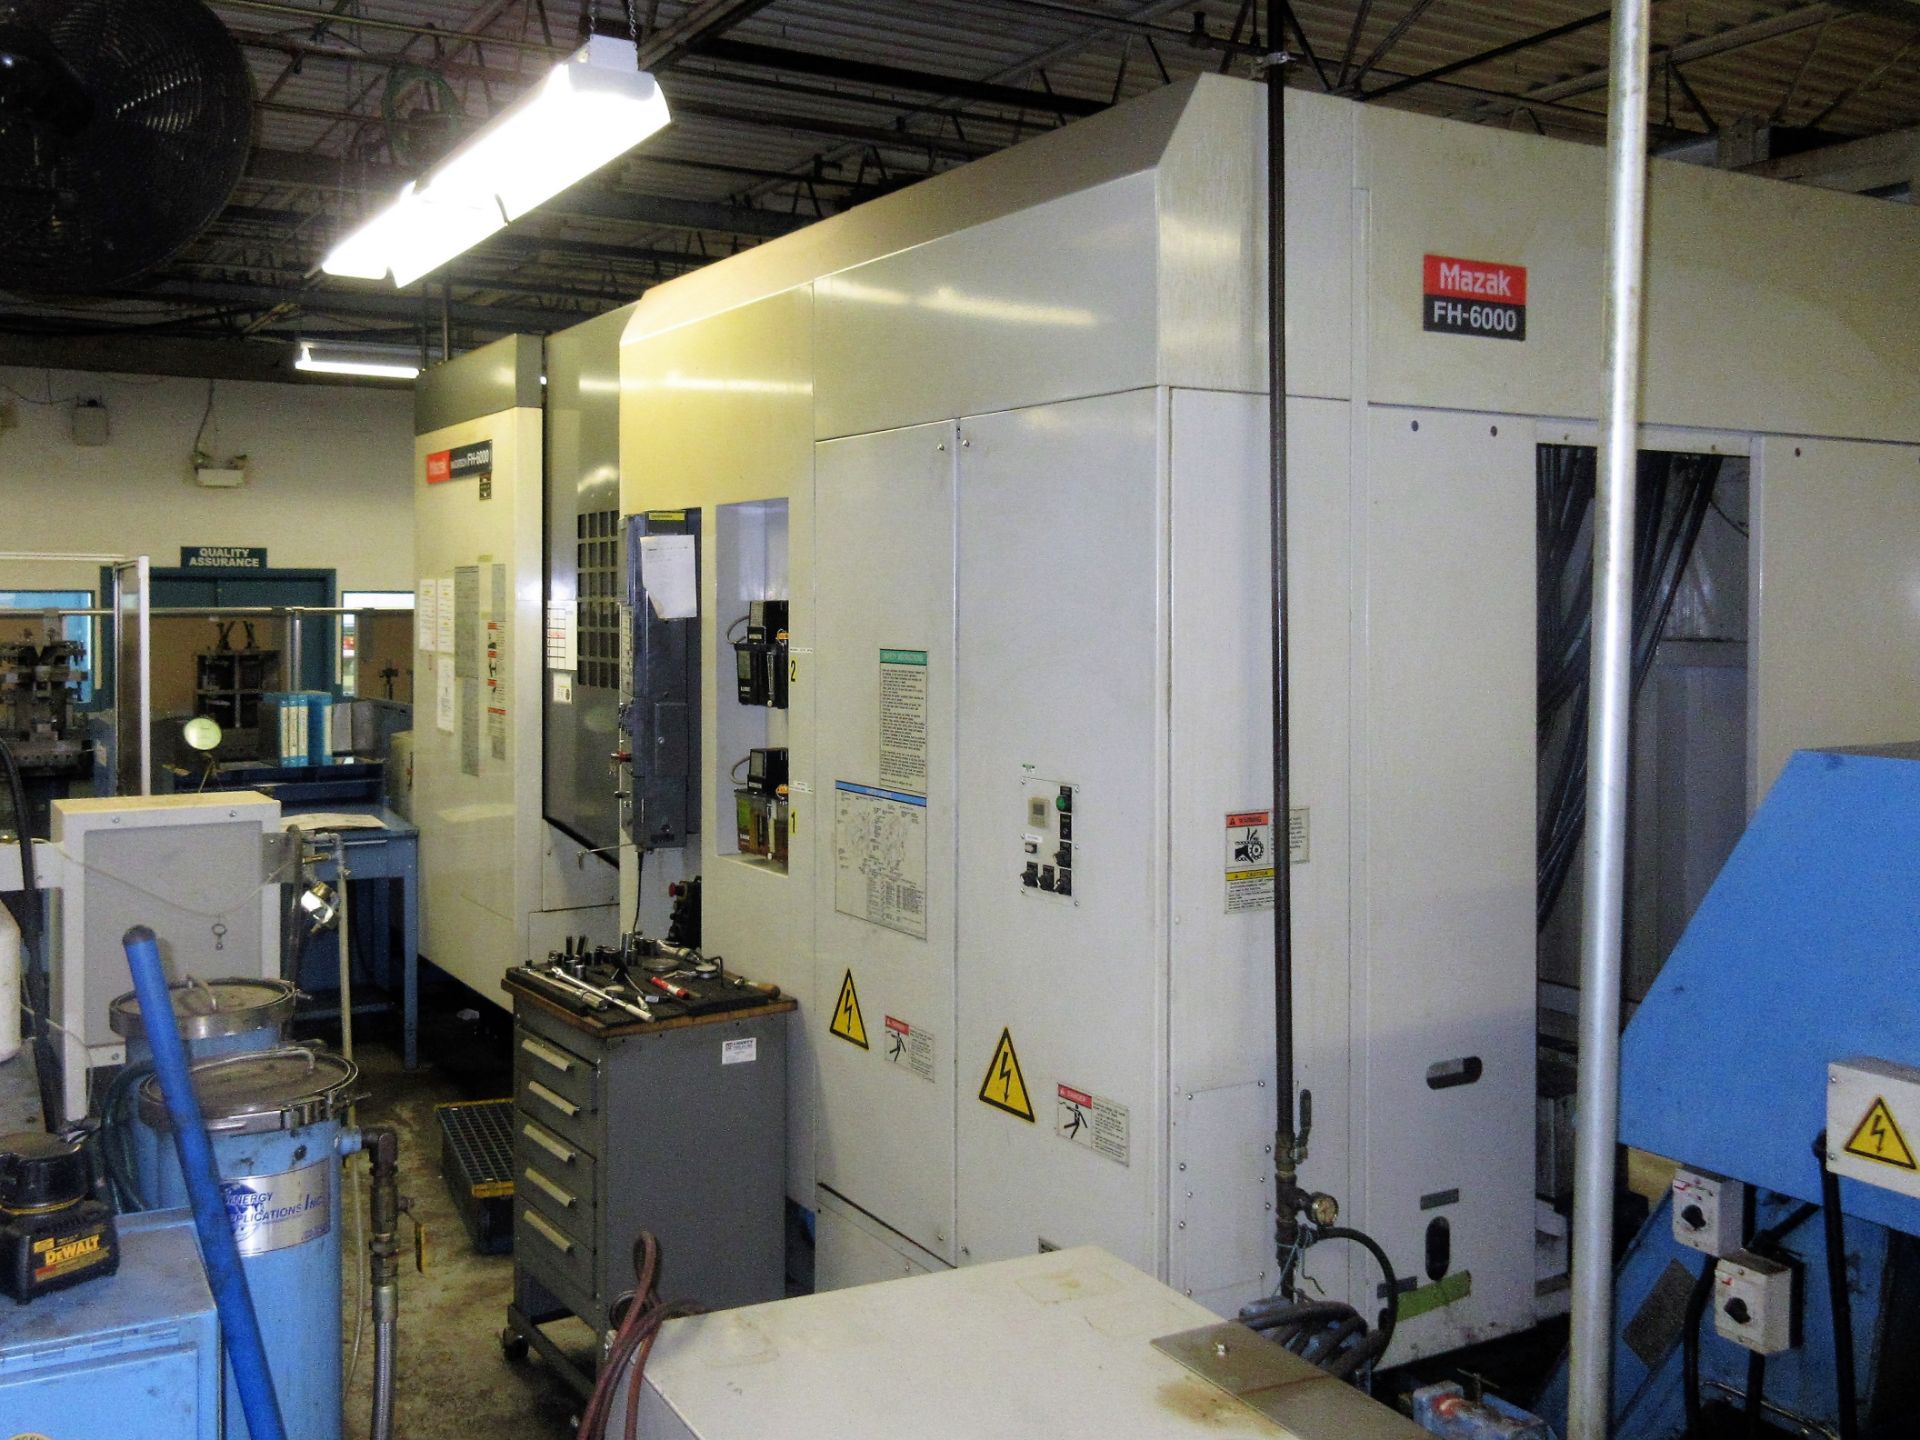 Mazak FH-6000 CNC Horizontal Machining Center With Palletech System - Image 19 of 21